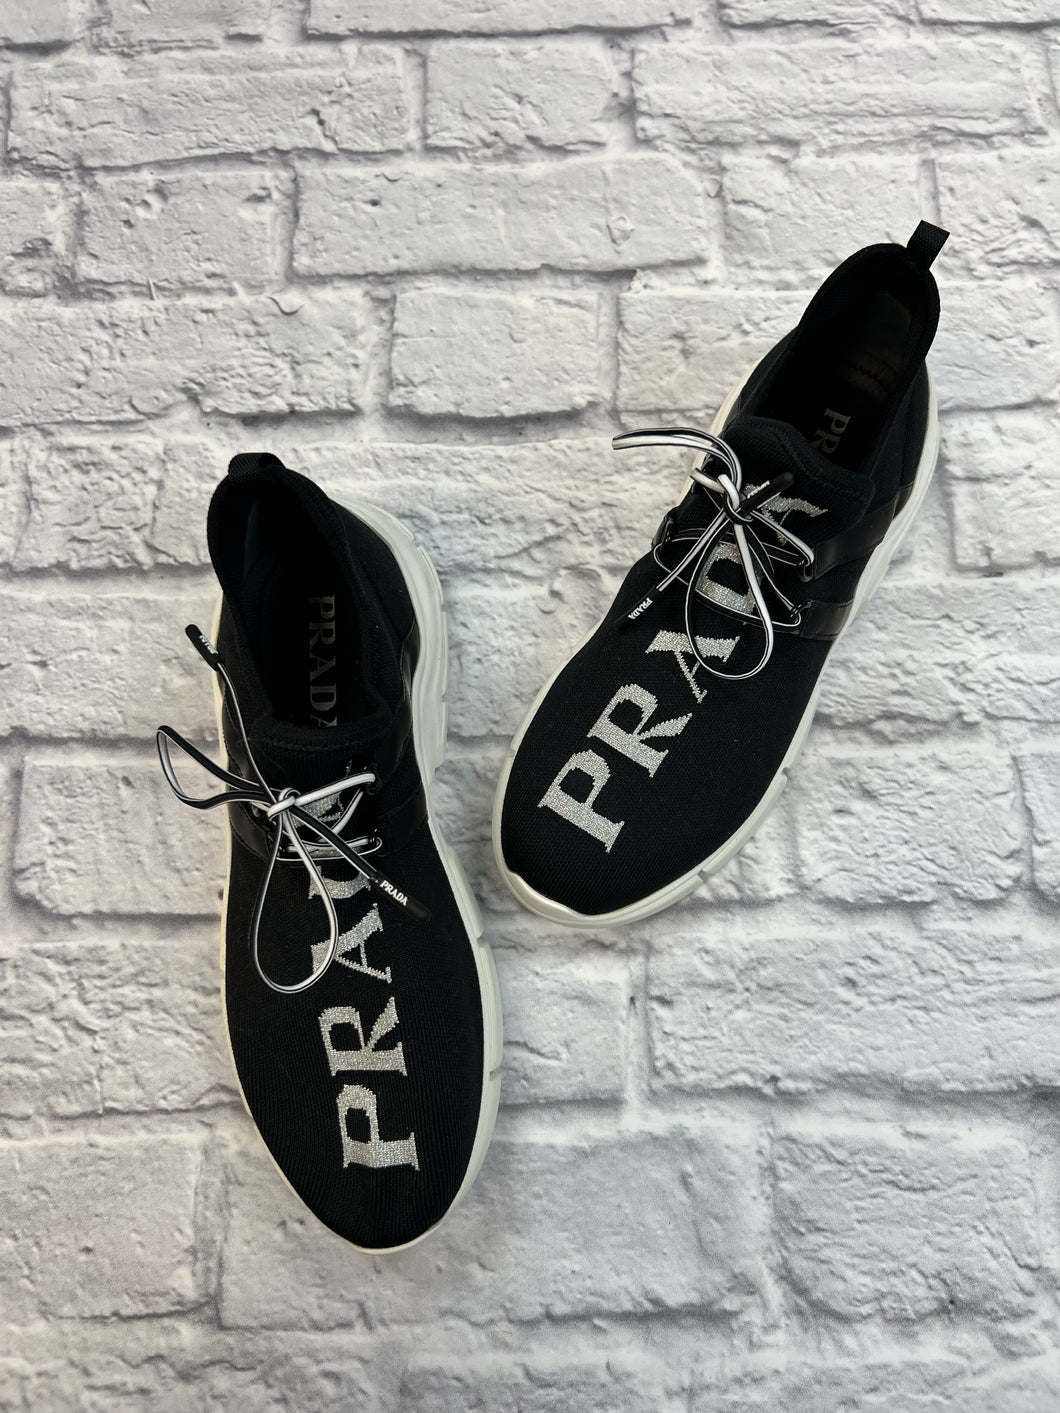 Prada Black Logo Sneakers, Size 39